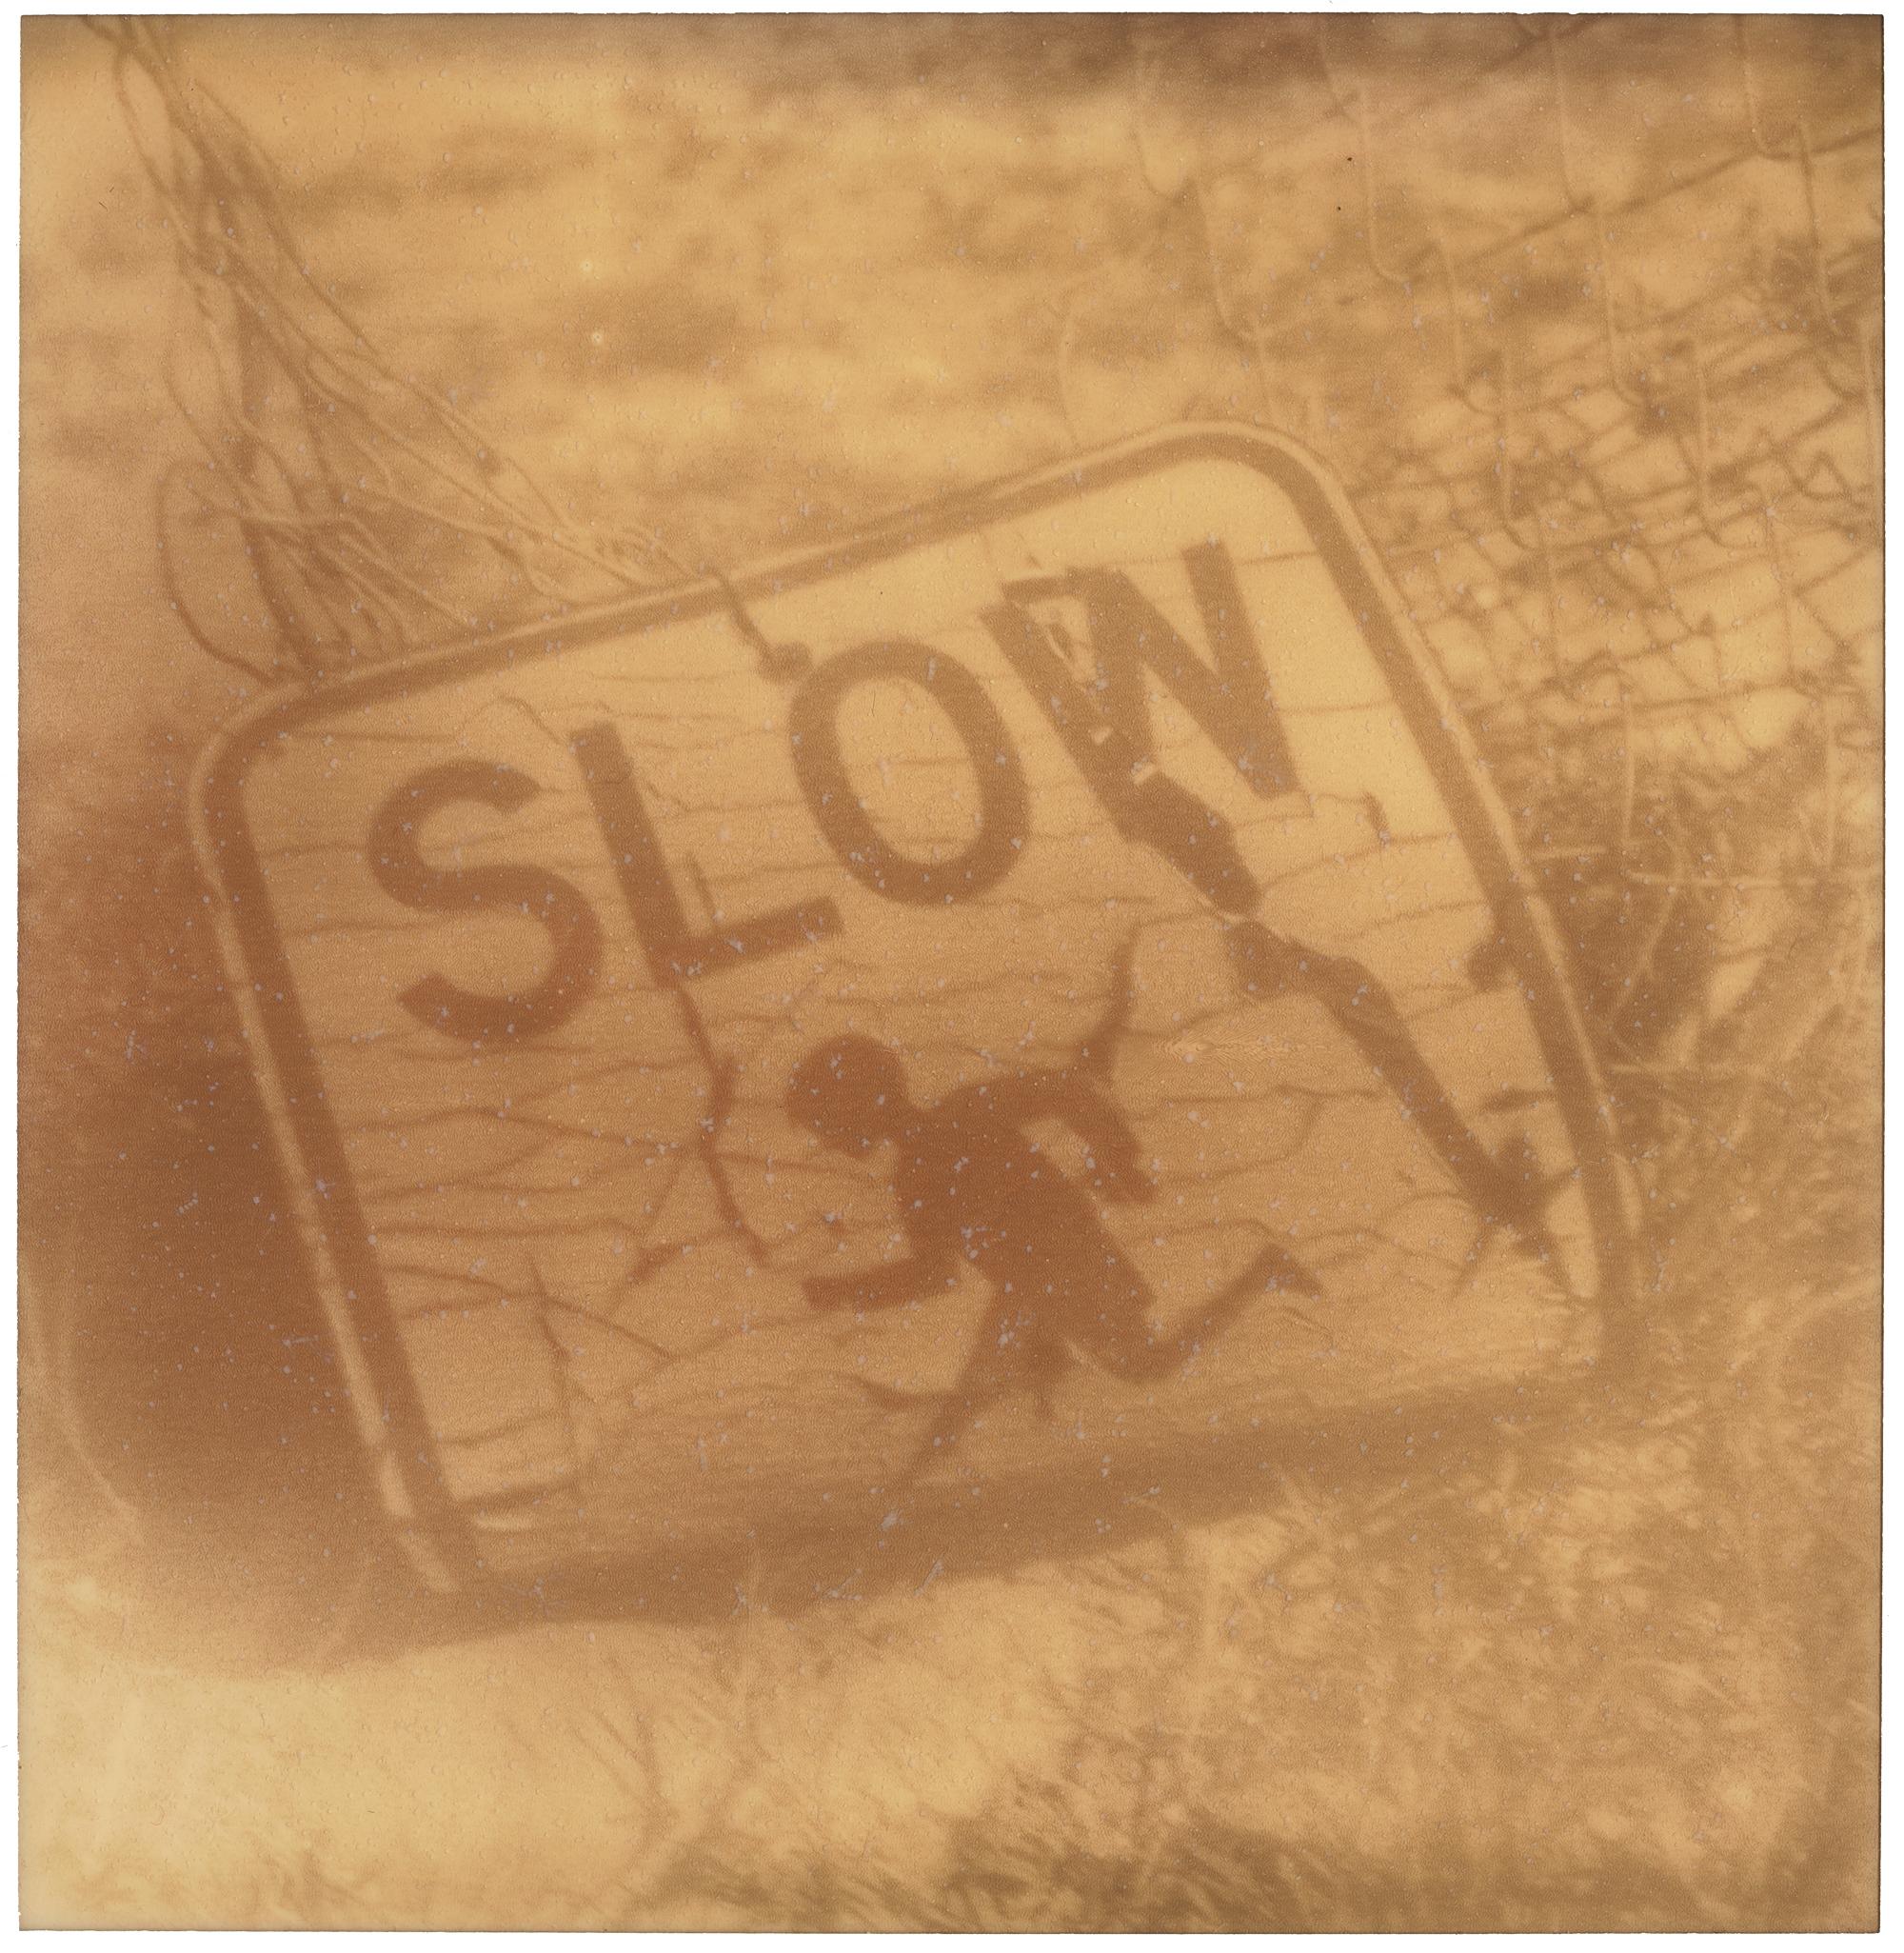 Slow (Oxana's 30th Birthday) - Contemporary, Landscape, Polaroid, expired - Photograph by Stefanie Schneider